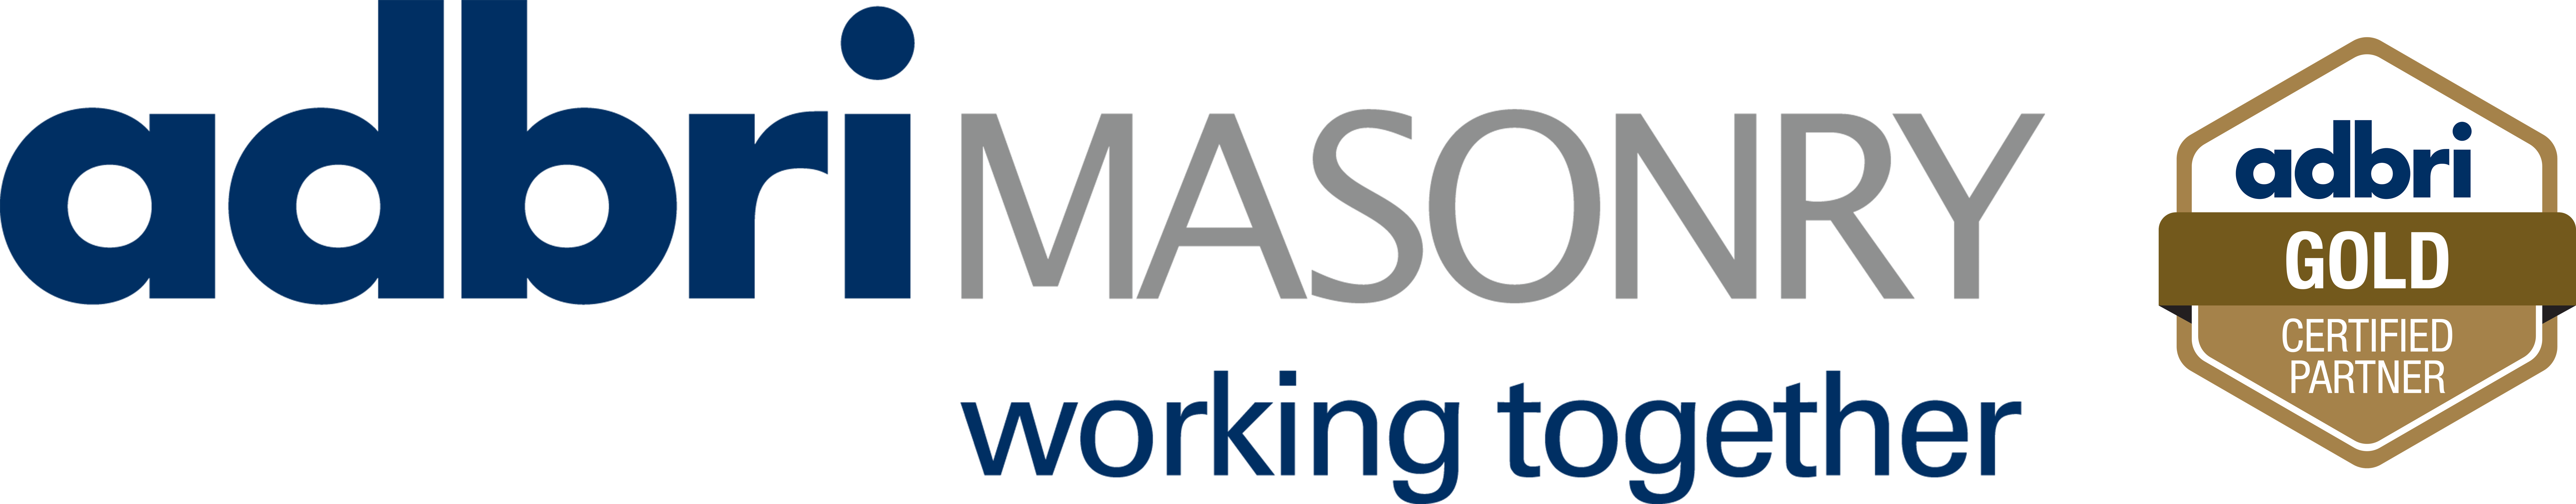 Adbri Masonry Logo | Working Together & Gold Certified